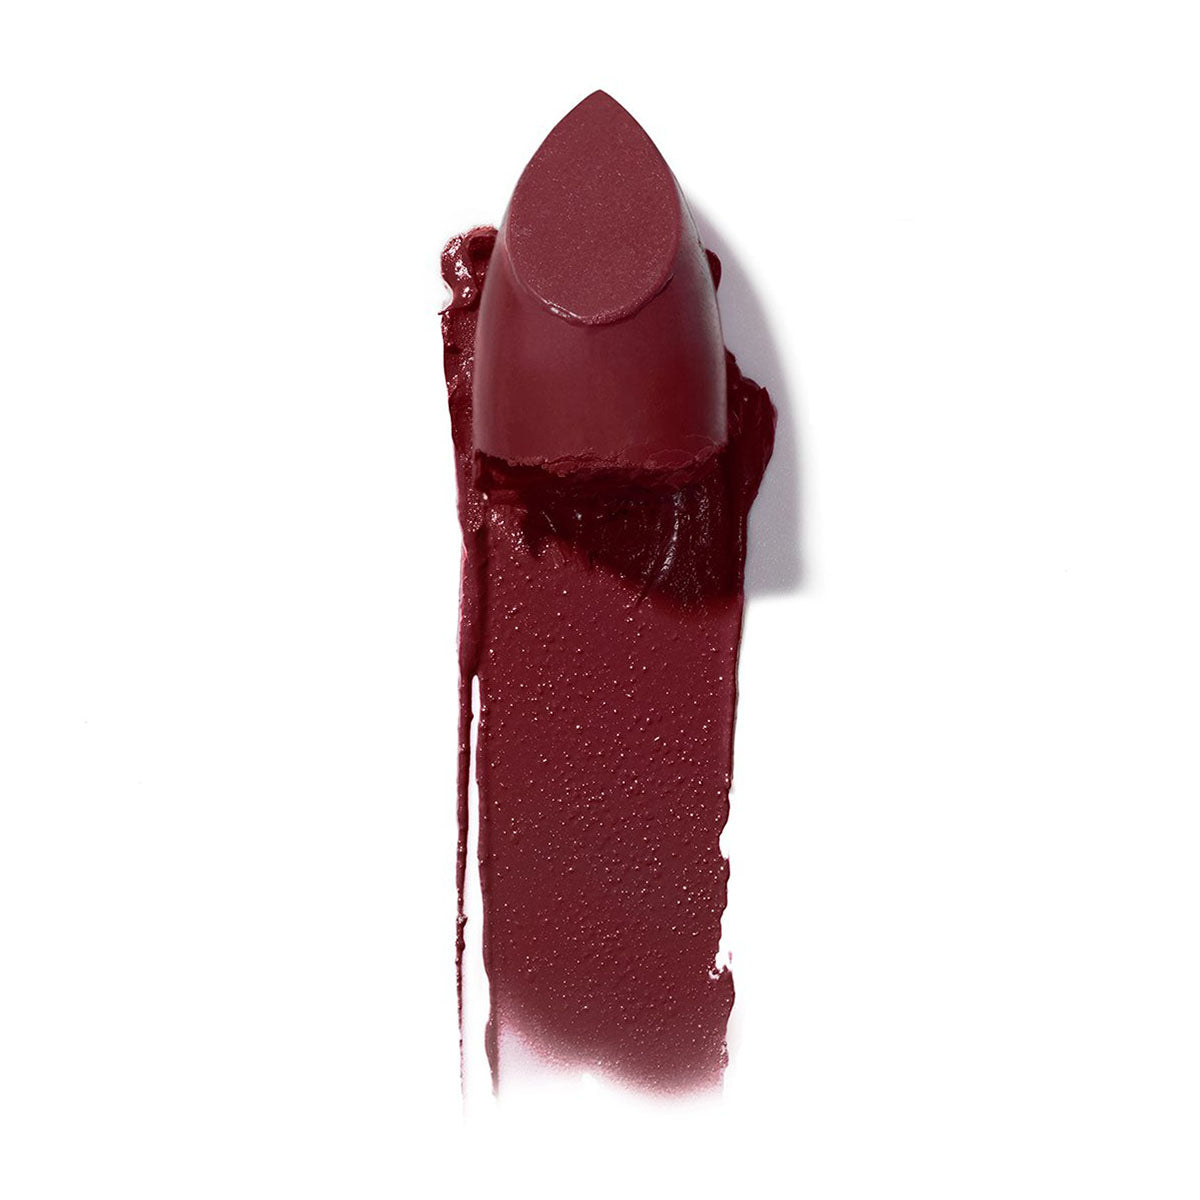 Alternate image of Color Block Lipstick in Rumba